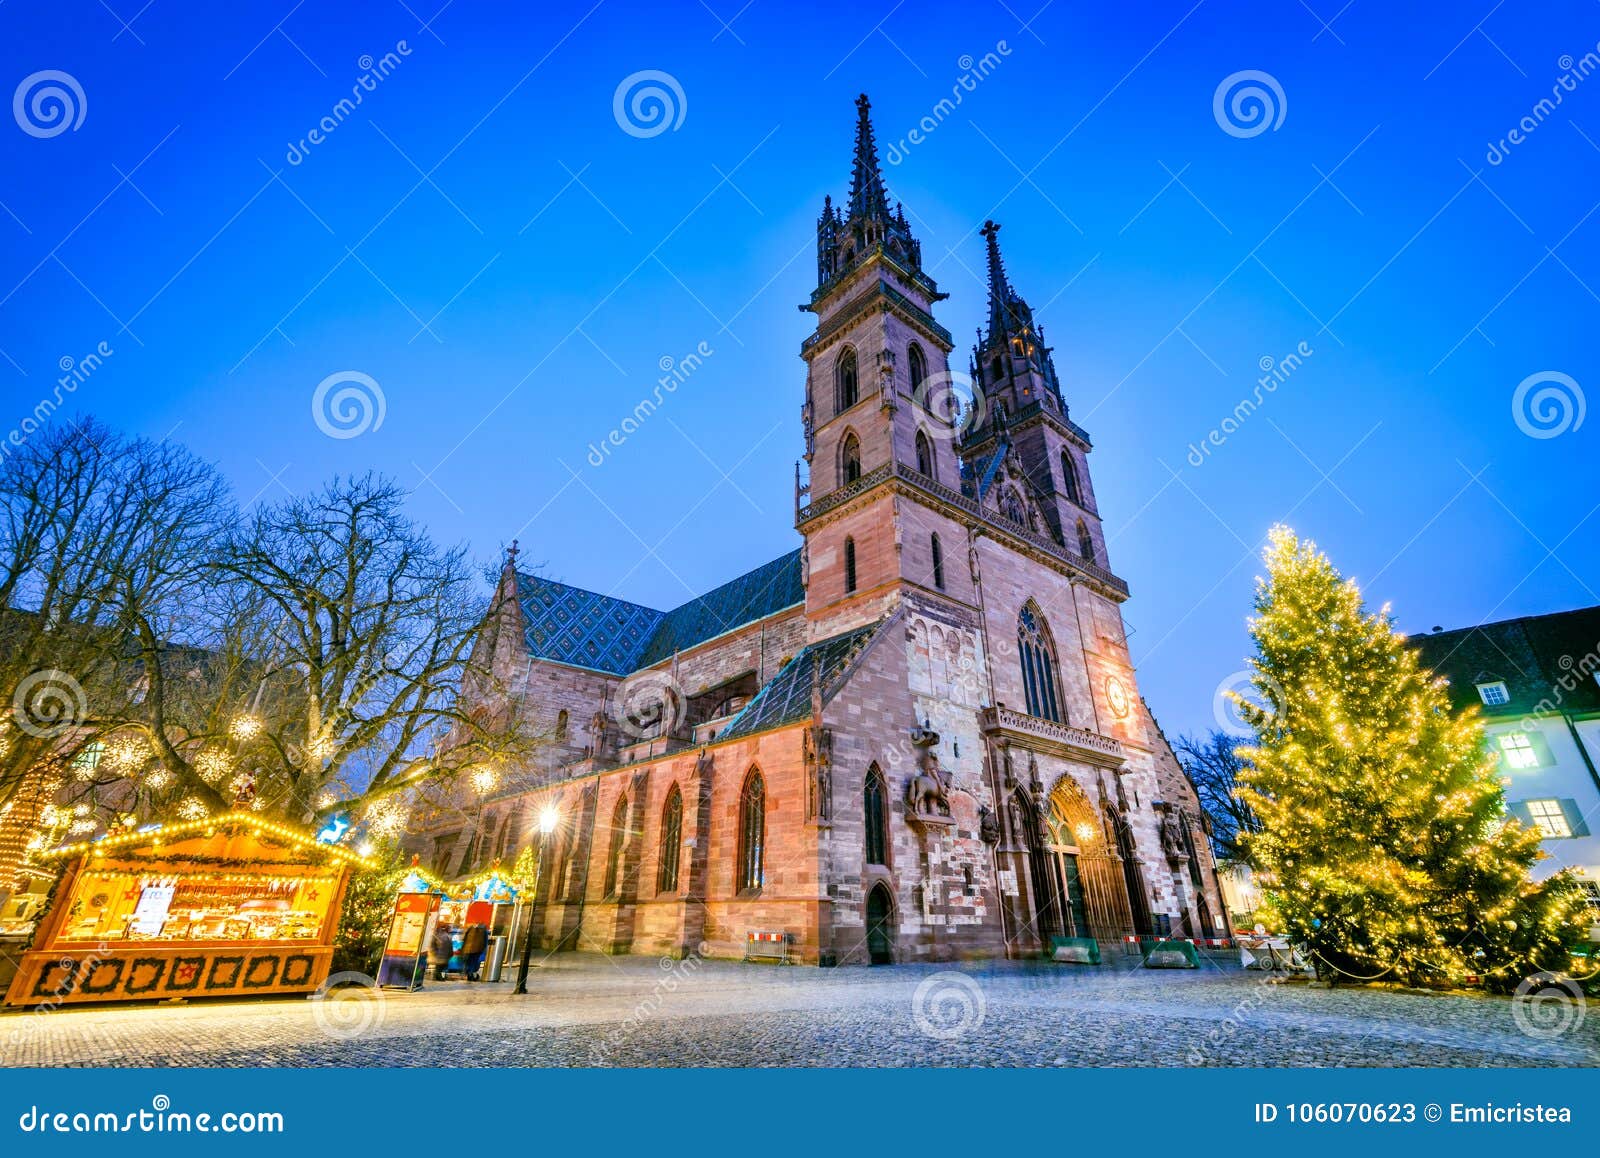 basel, swizterland - munster cathedral and christmas market